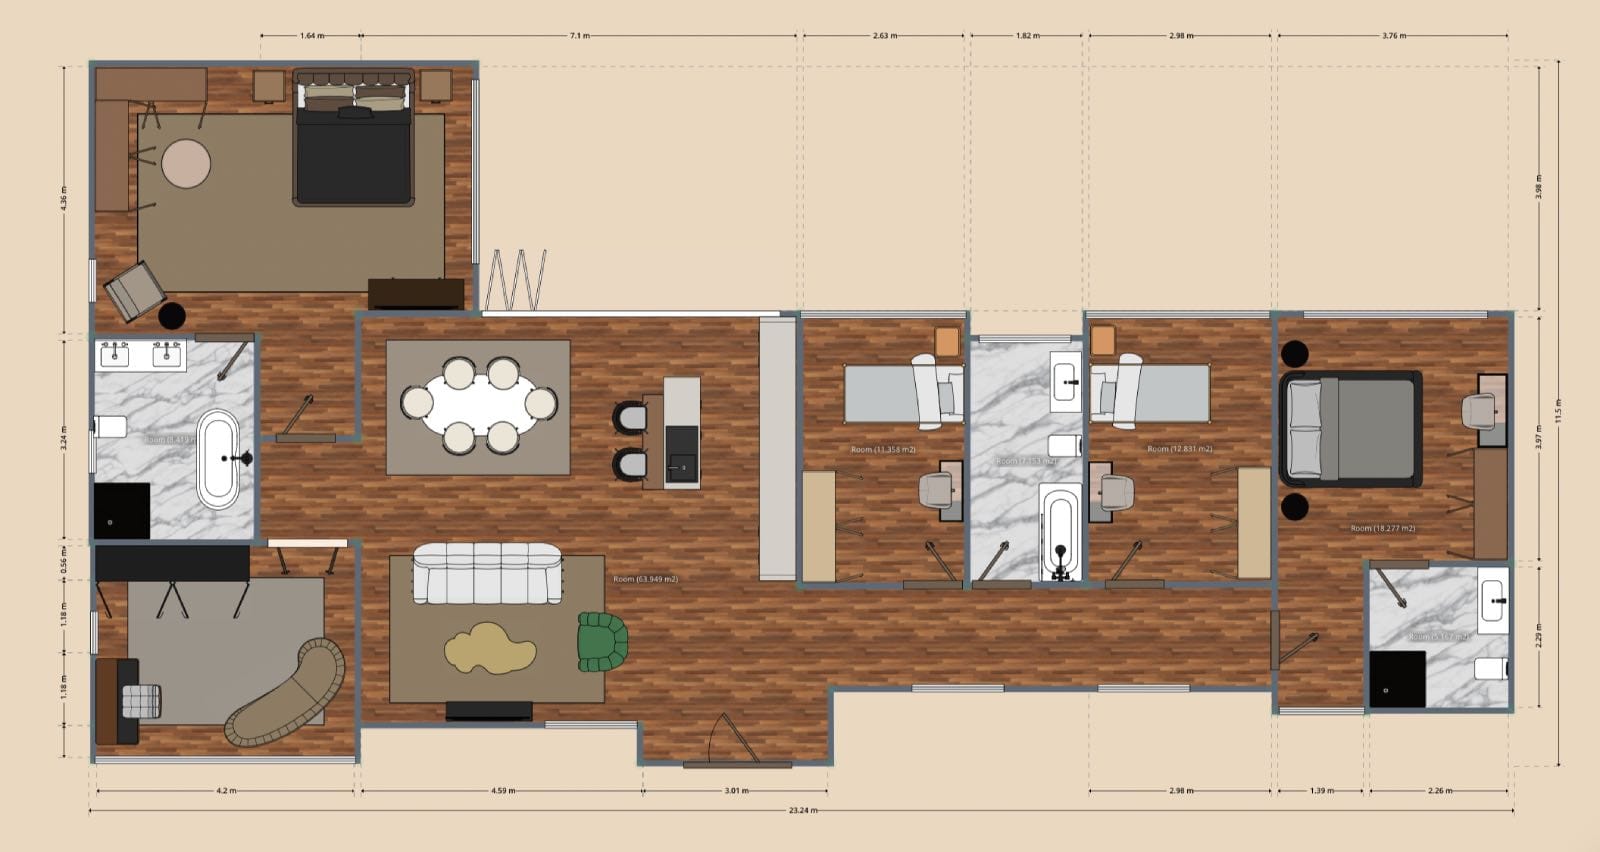 1 storey home floor plan, interior design software, planner 5D